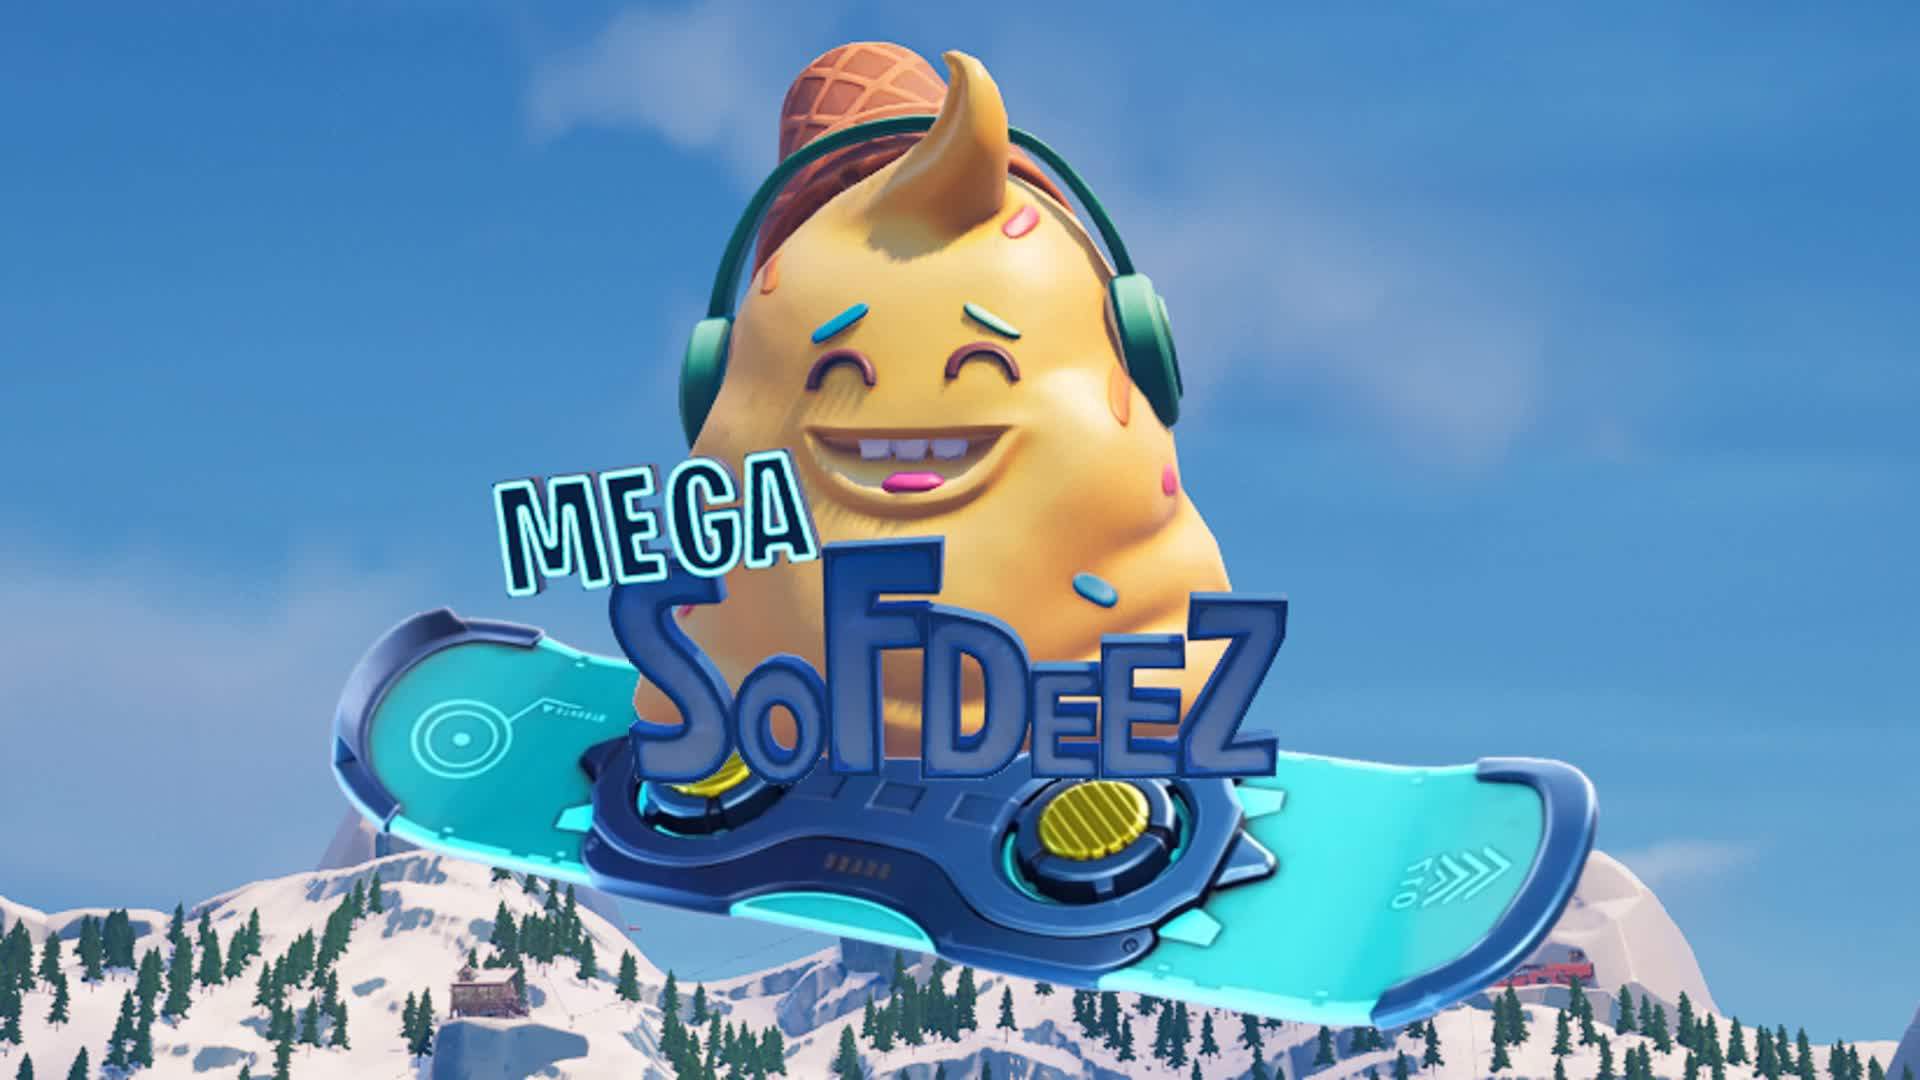 Mega SoFDeeZ Slopes